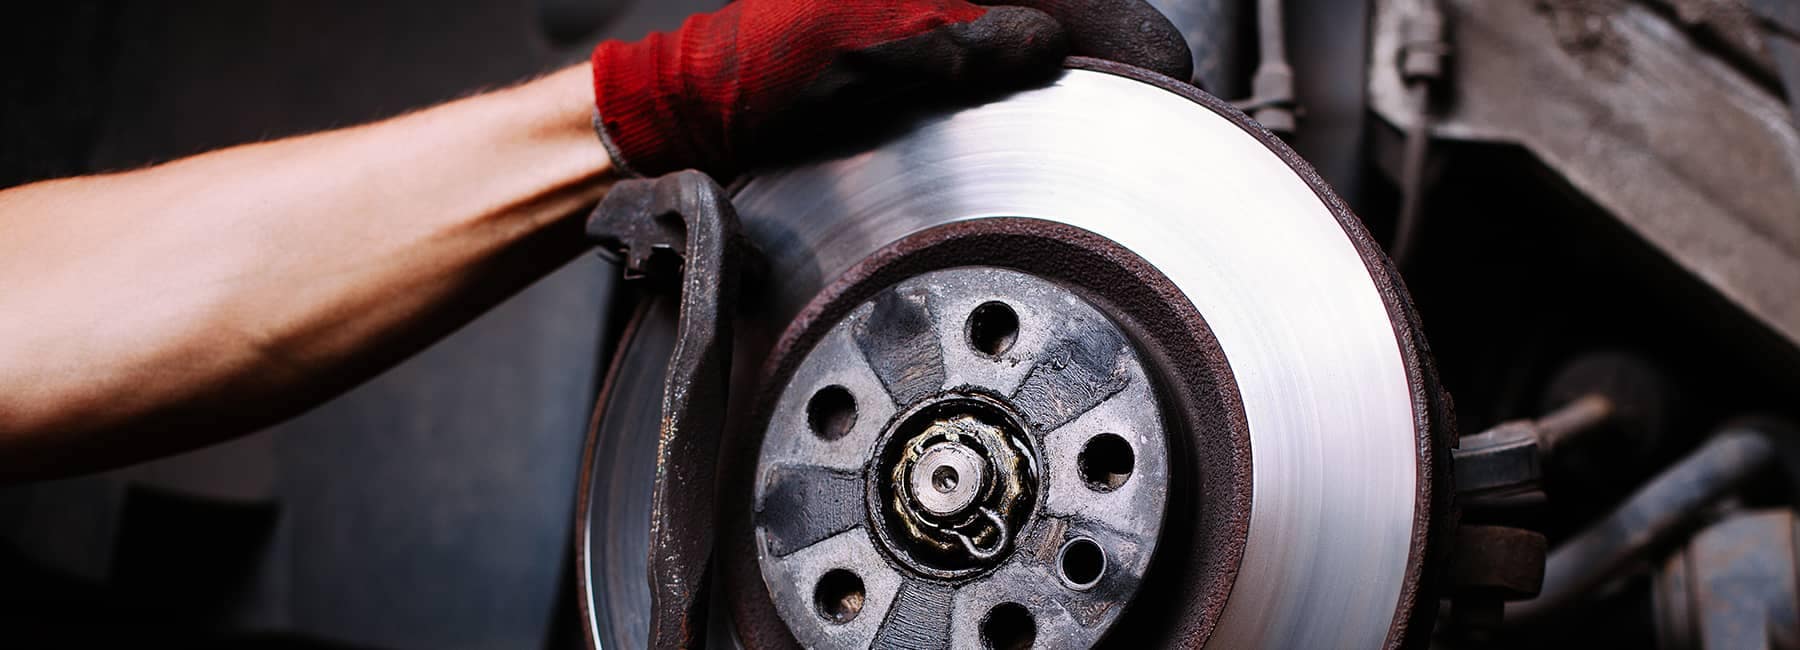 Replacing brake pads on a vehicle